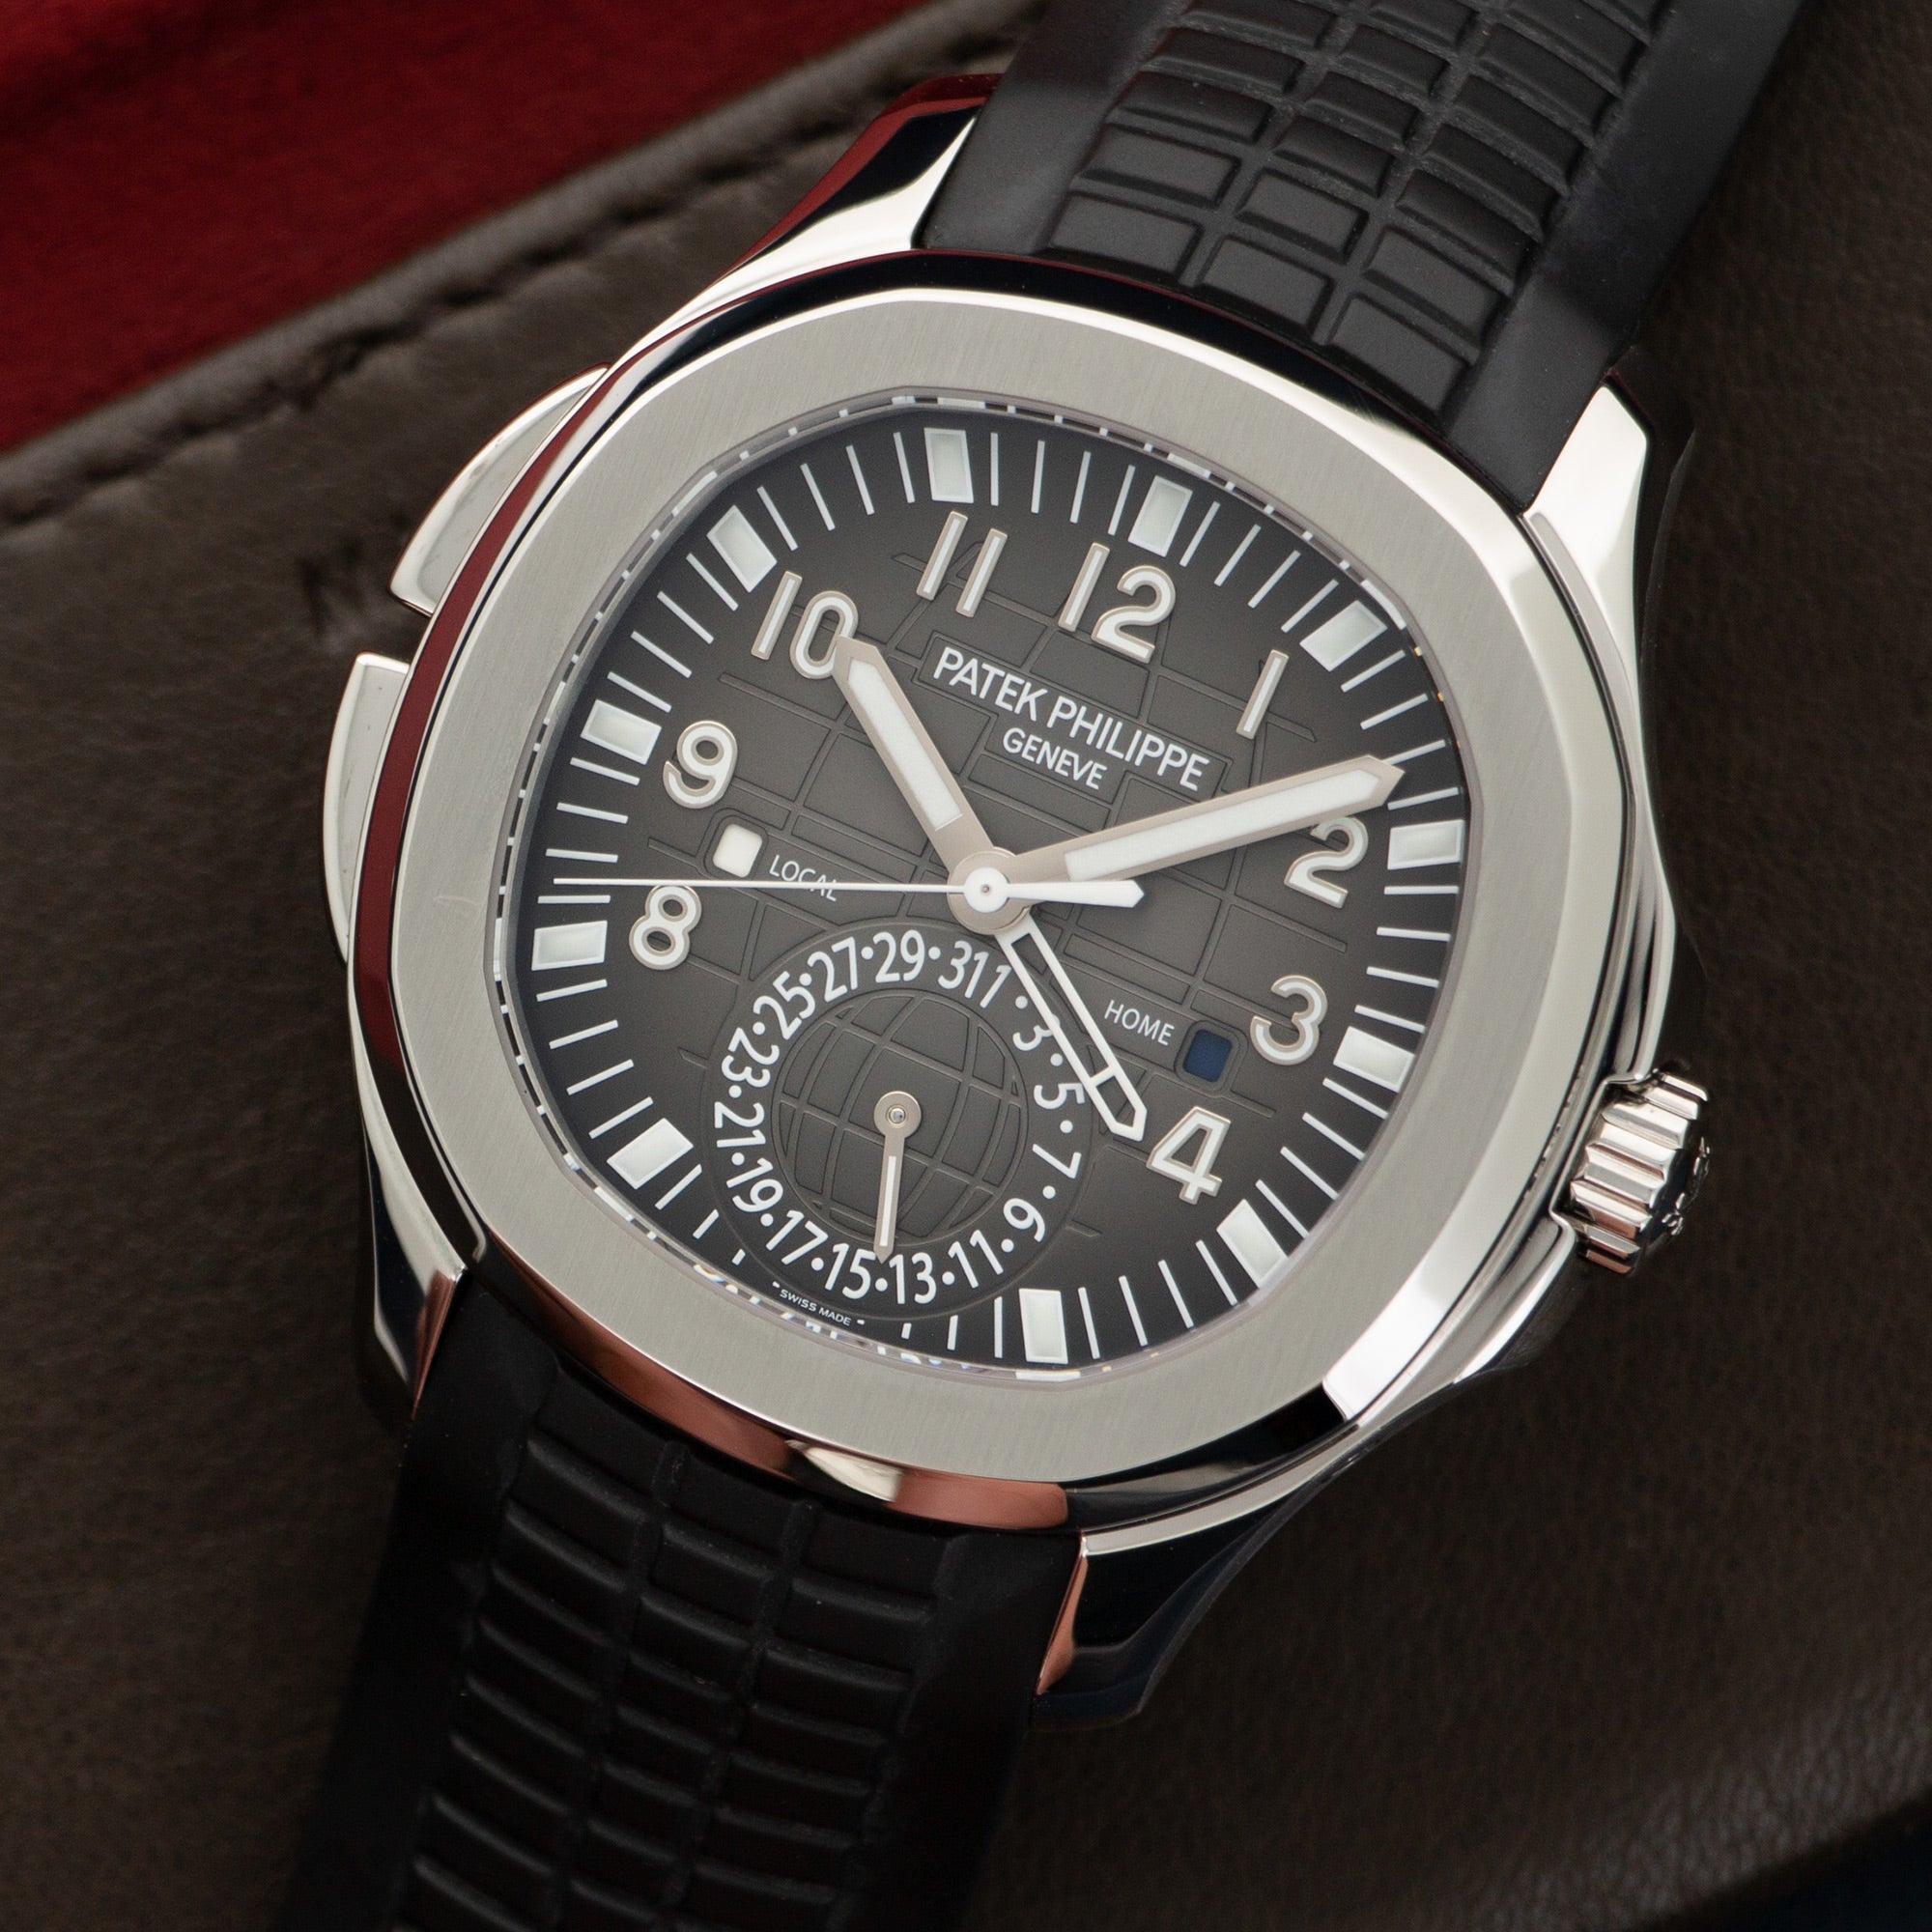 Patek Philippe - Patek Philippe Aquanaut Travel Time Watch Ref. 5164 - The Keystone Watches